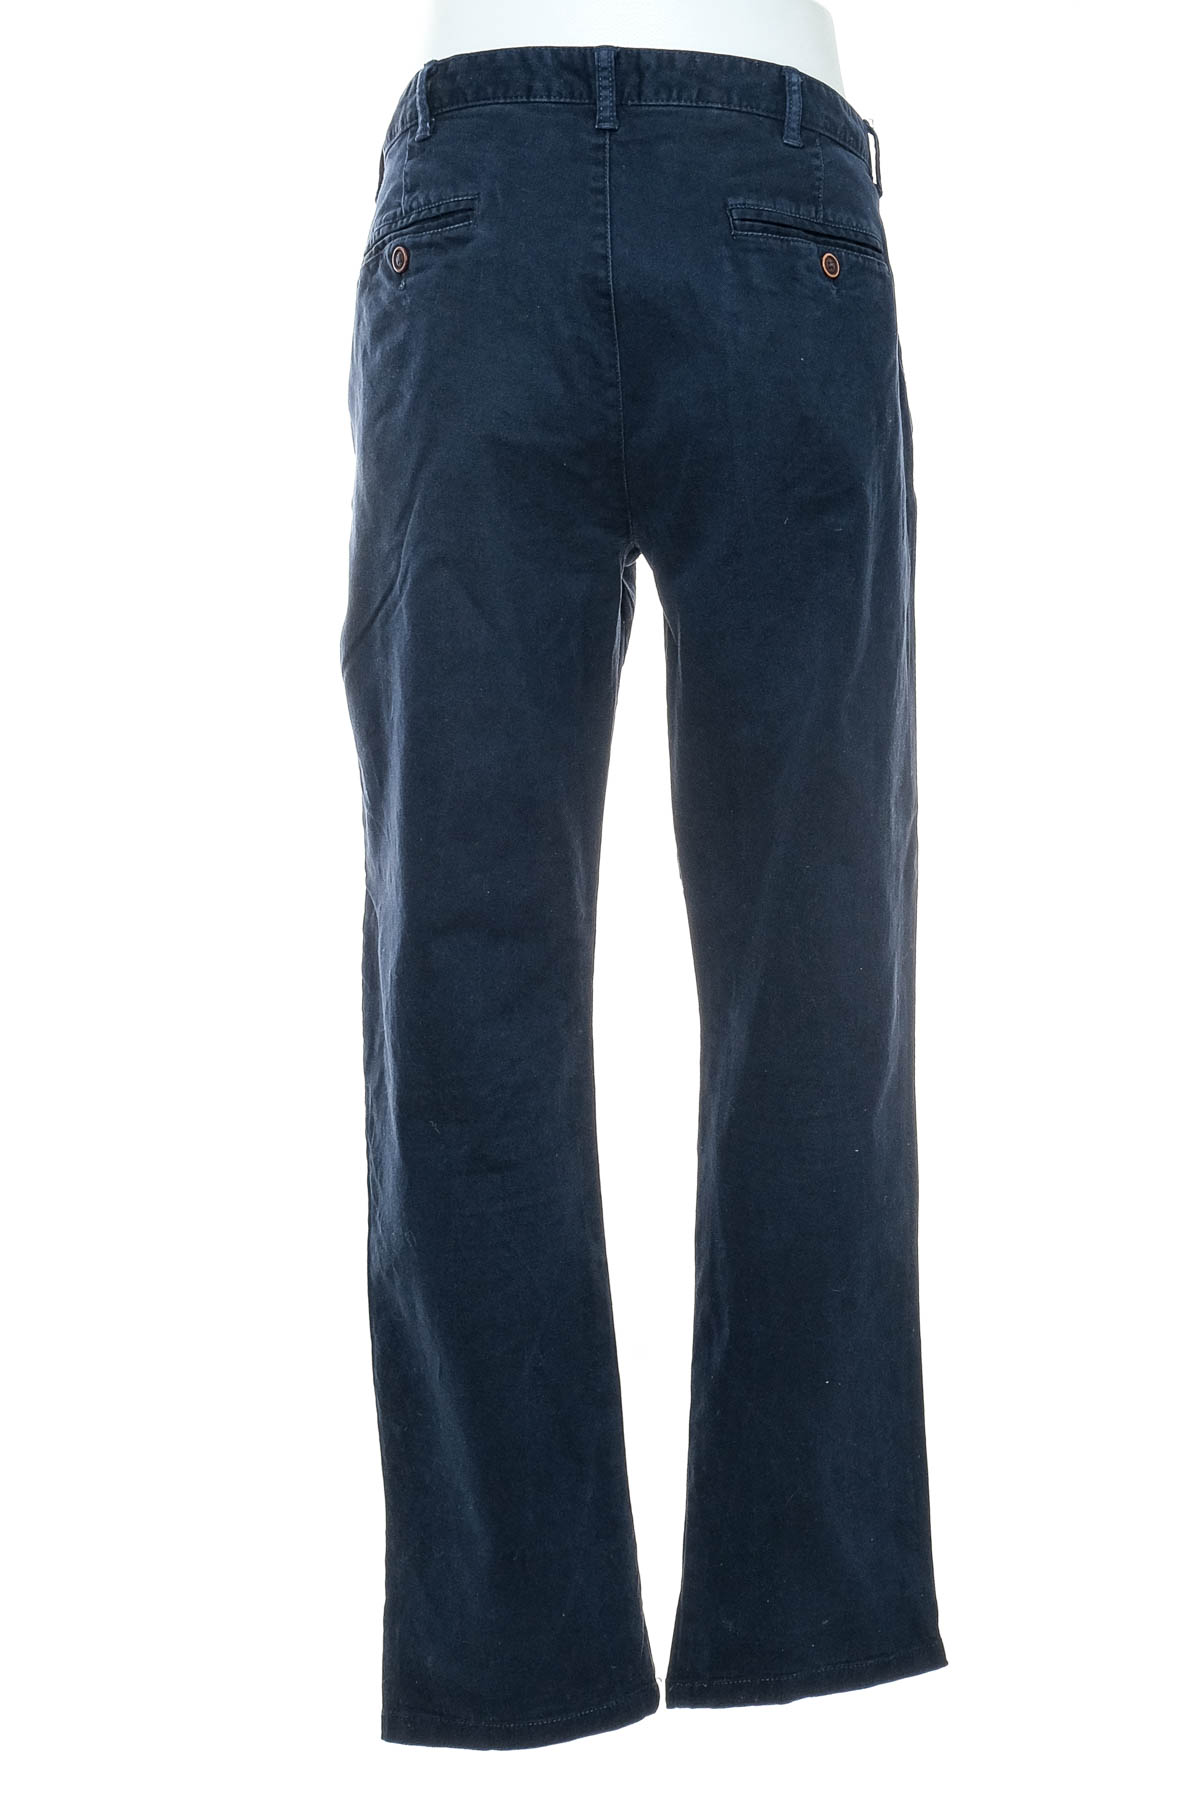 Men's trousers - LC Waikiki BASIC - 1